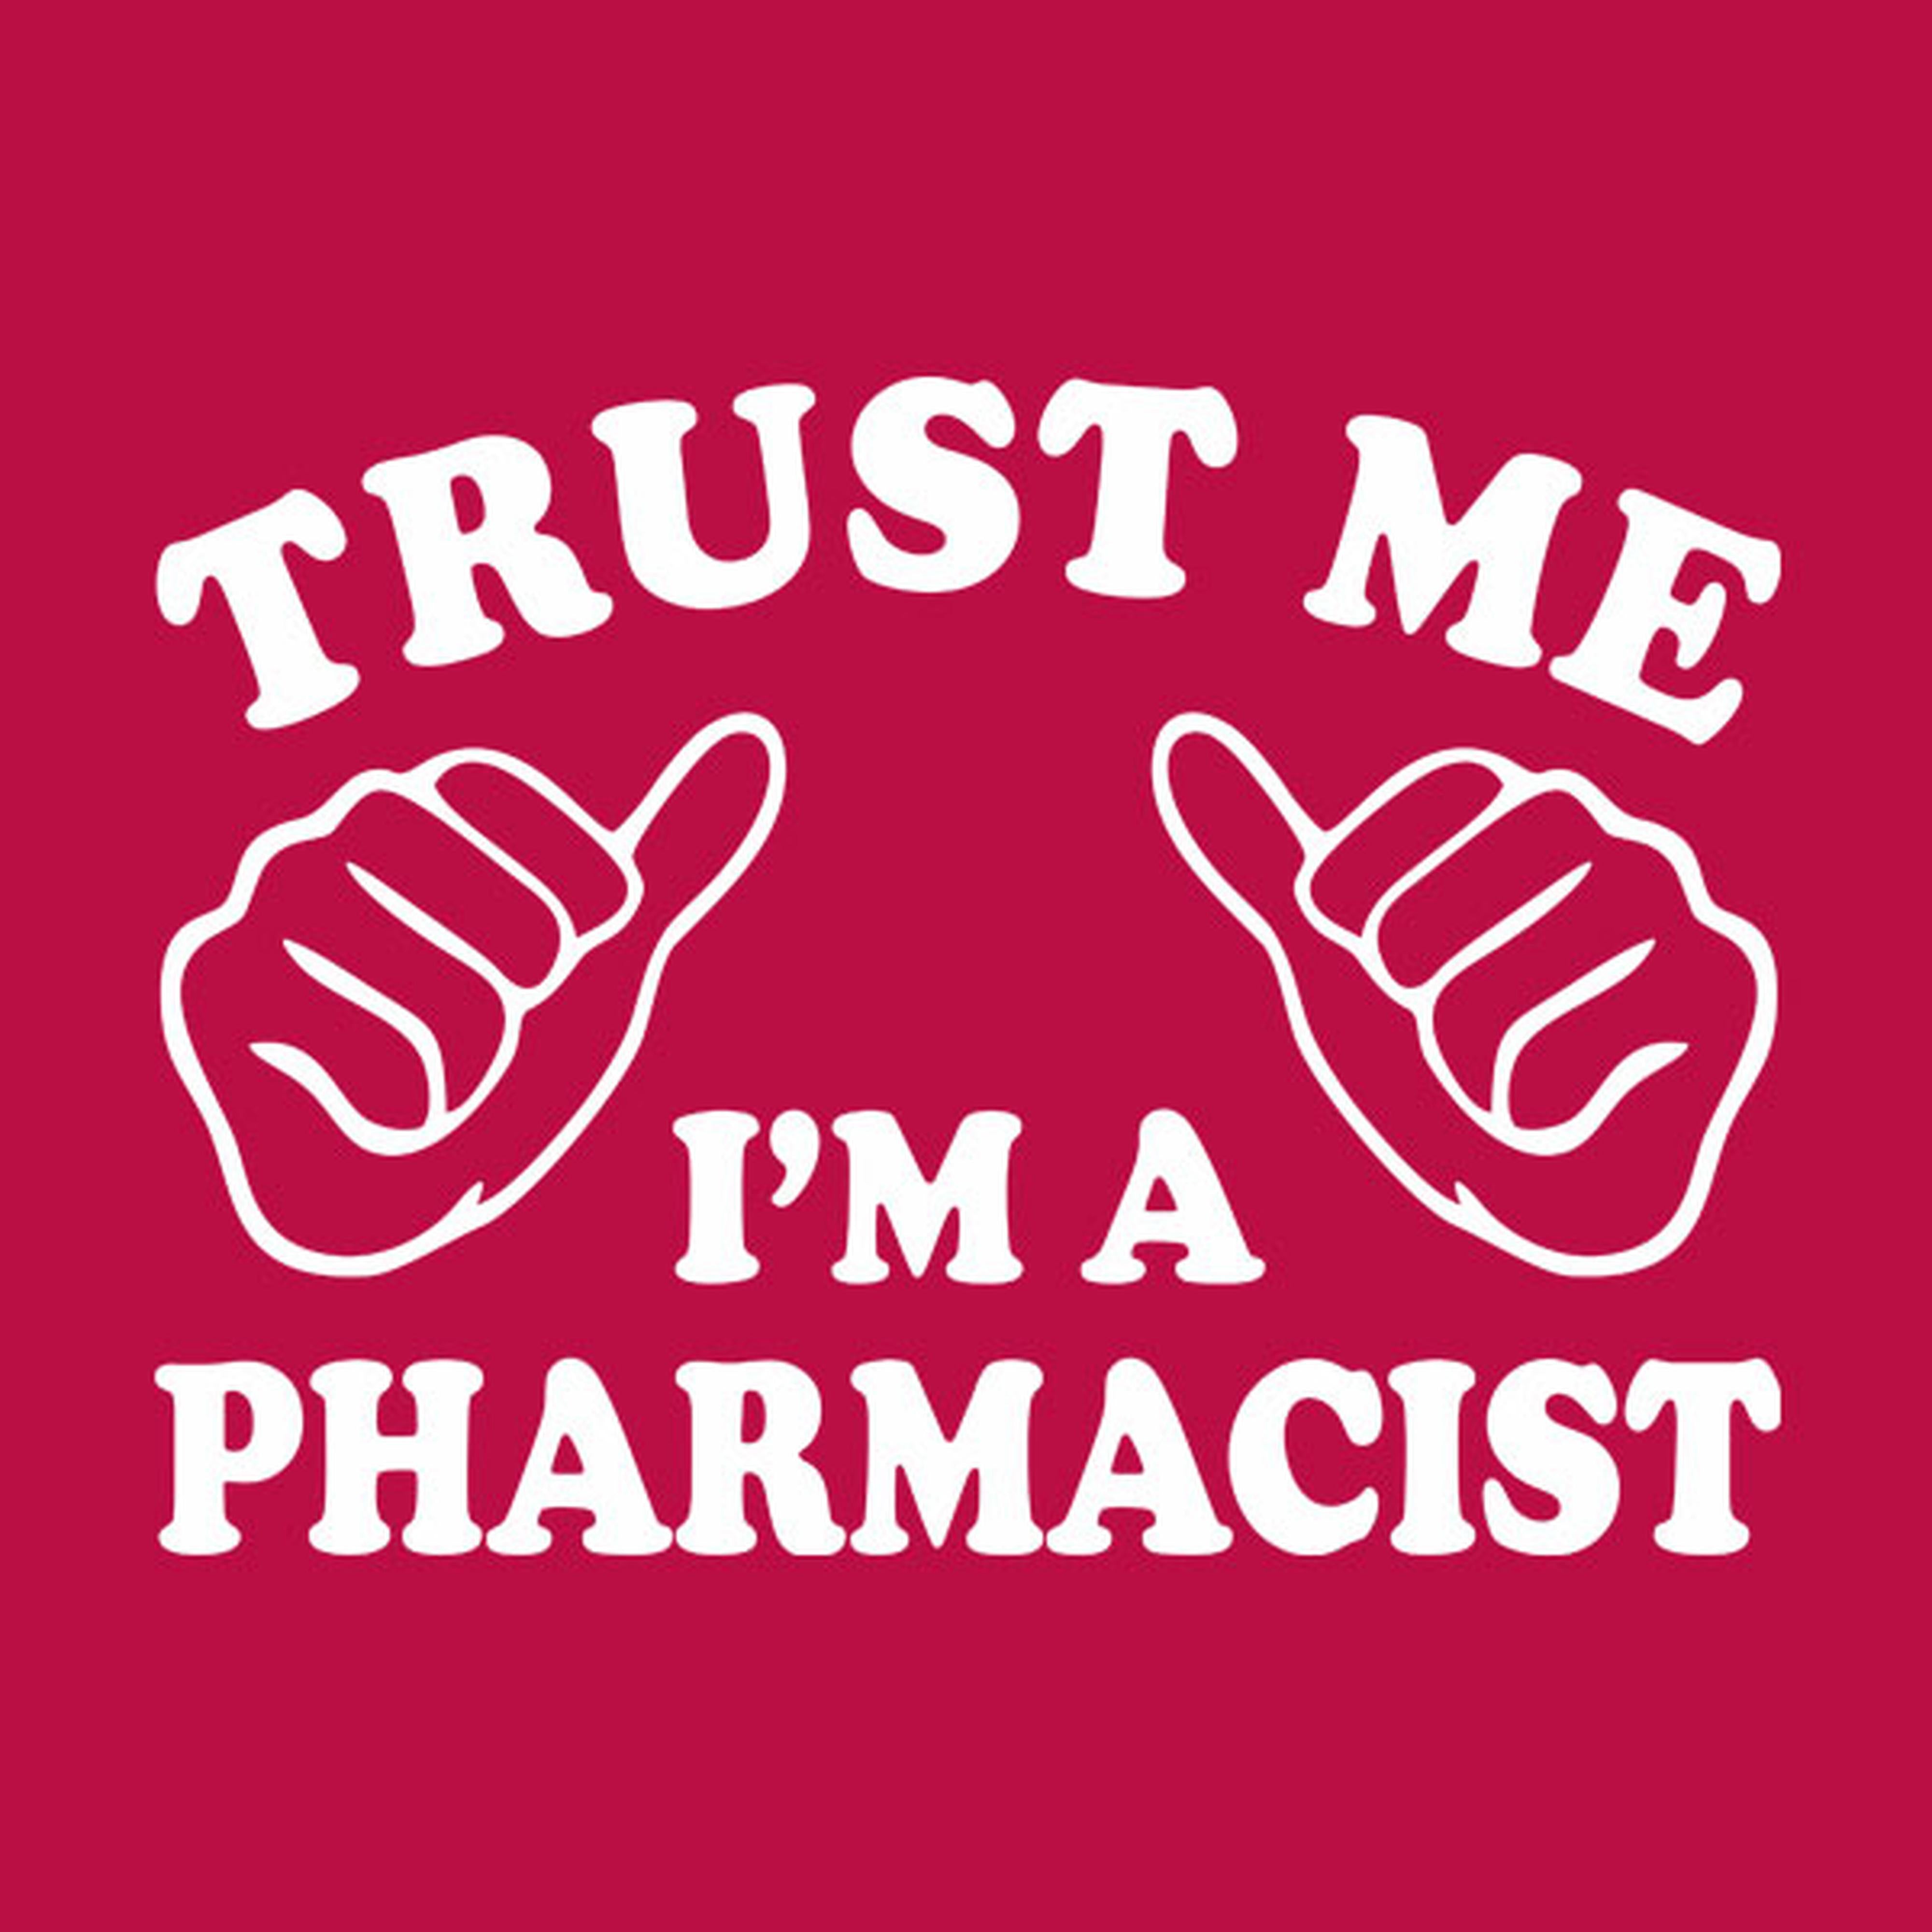 Trust me - I am a pharmacist - T-shirt